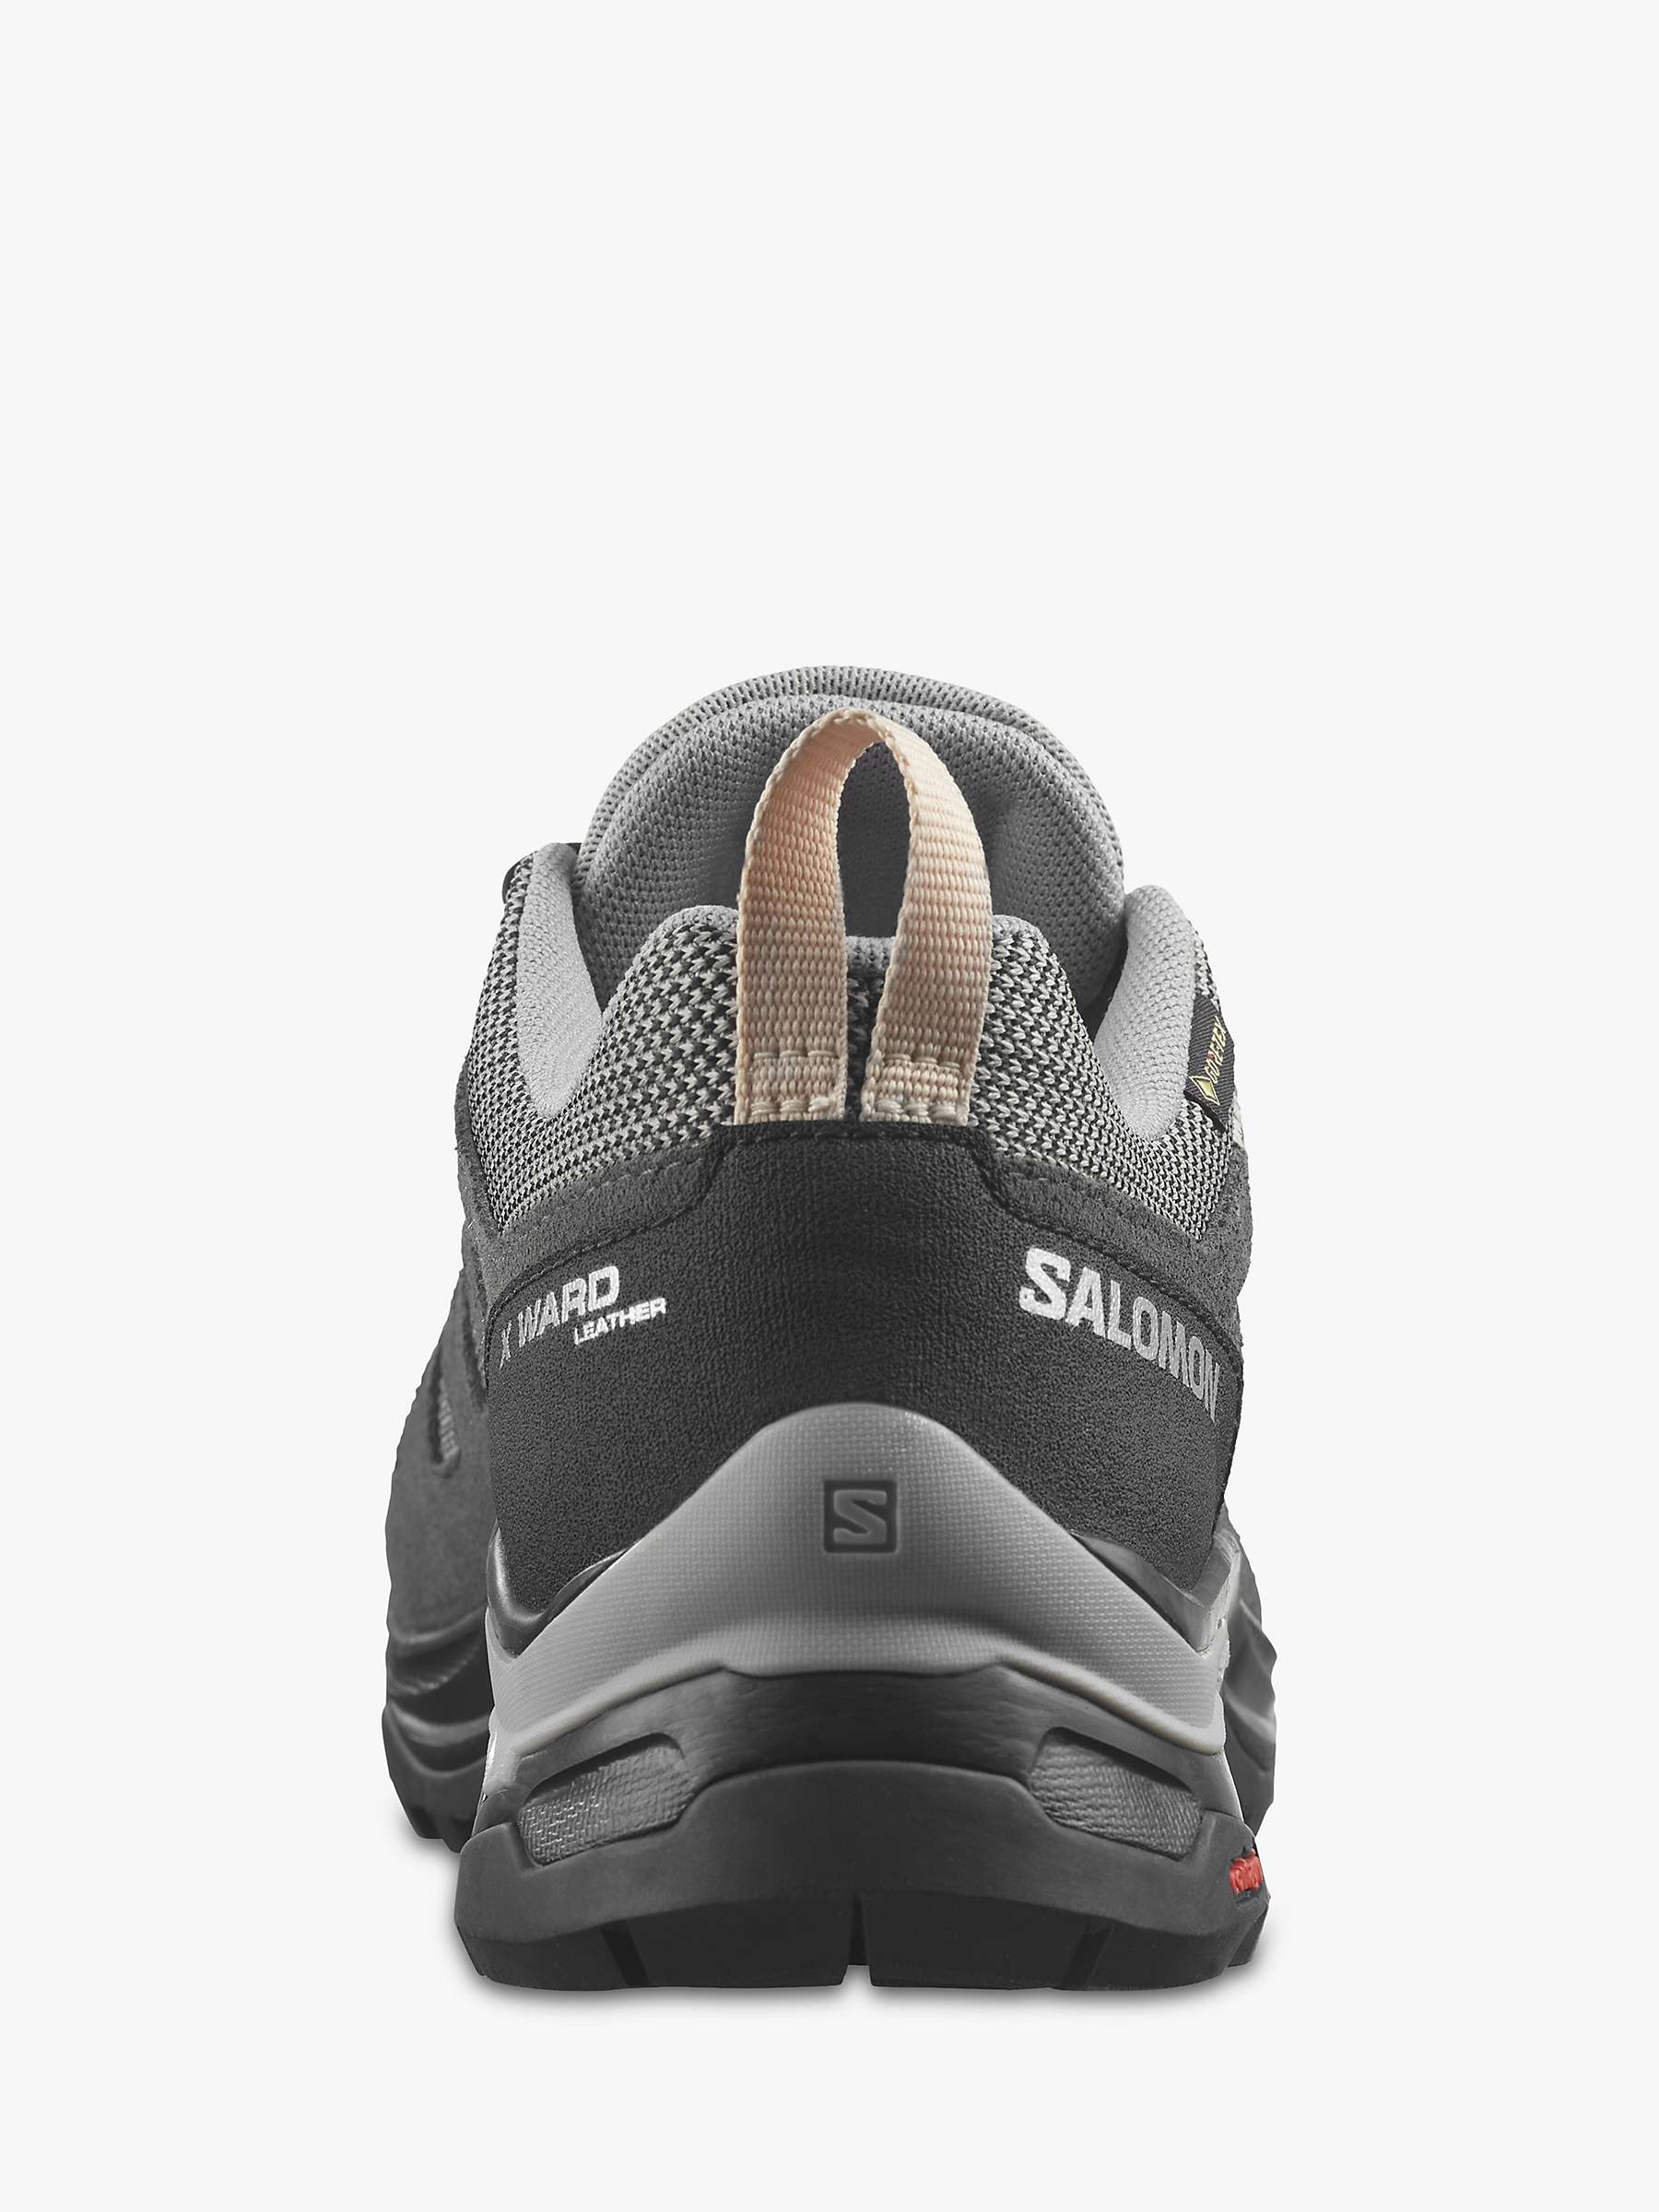 Buy Salomon X Ward Leather Gore-Tex Women's Trail Shoes, Gull/Black Online at johnlewis.com